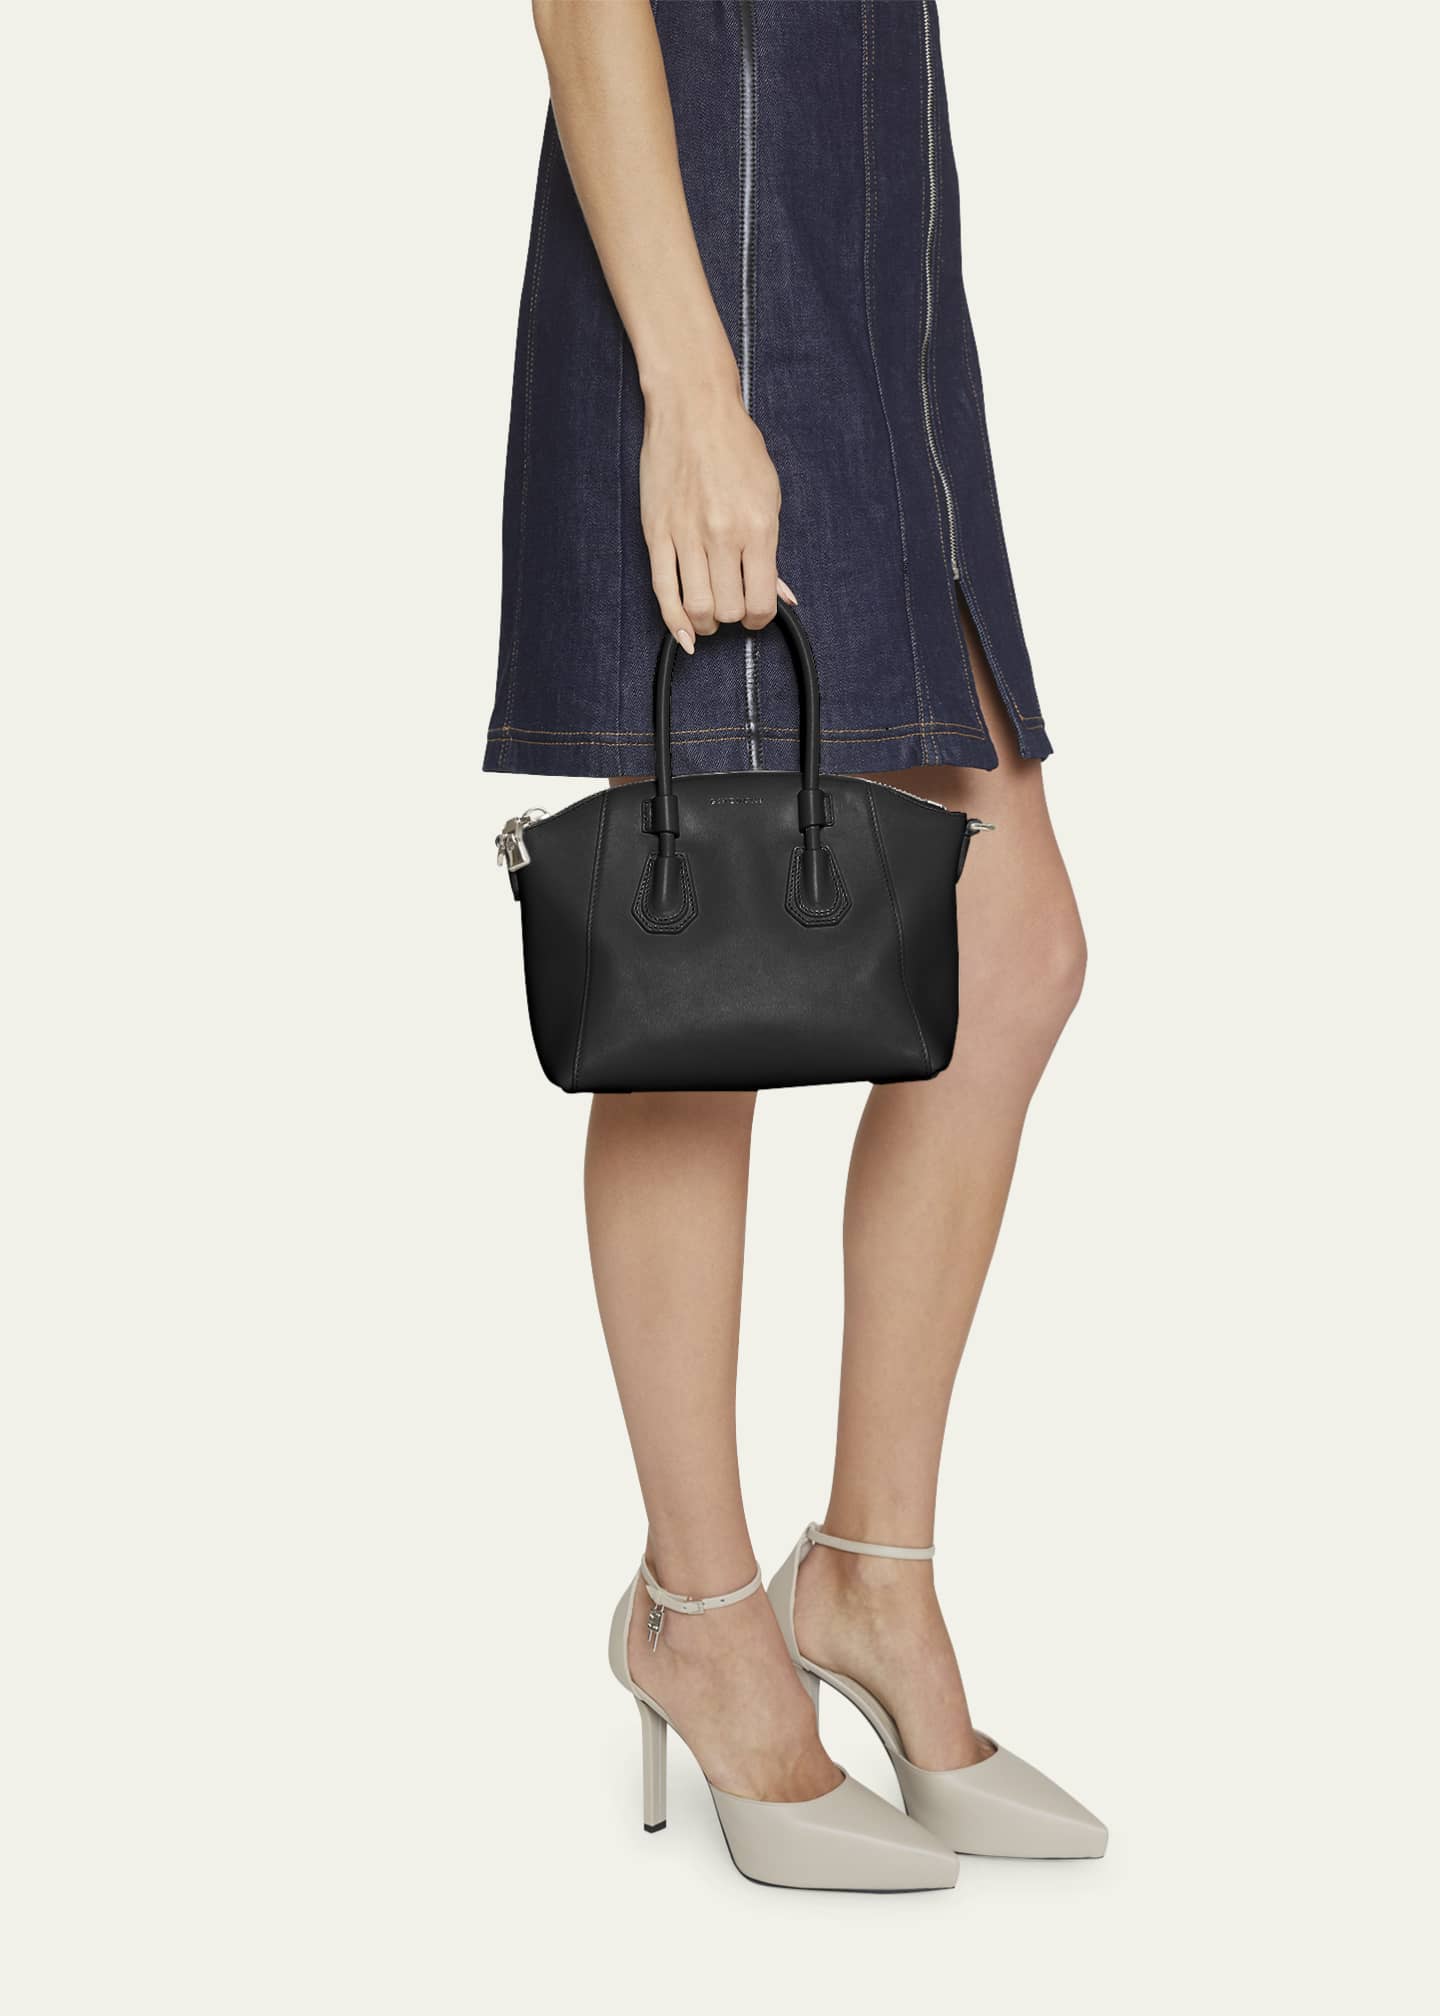 Givenchy Antigona Mini Leather Satchel Bag